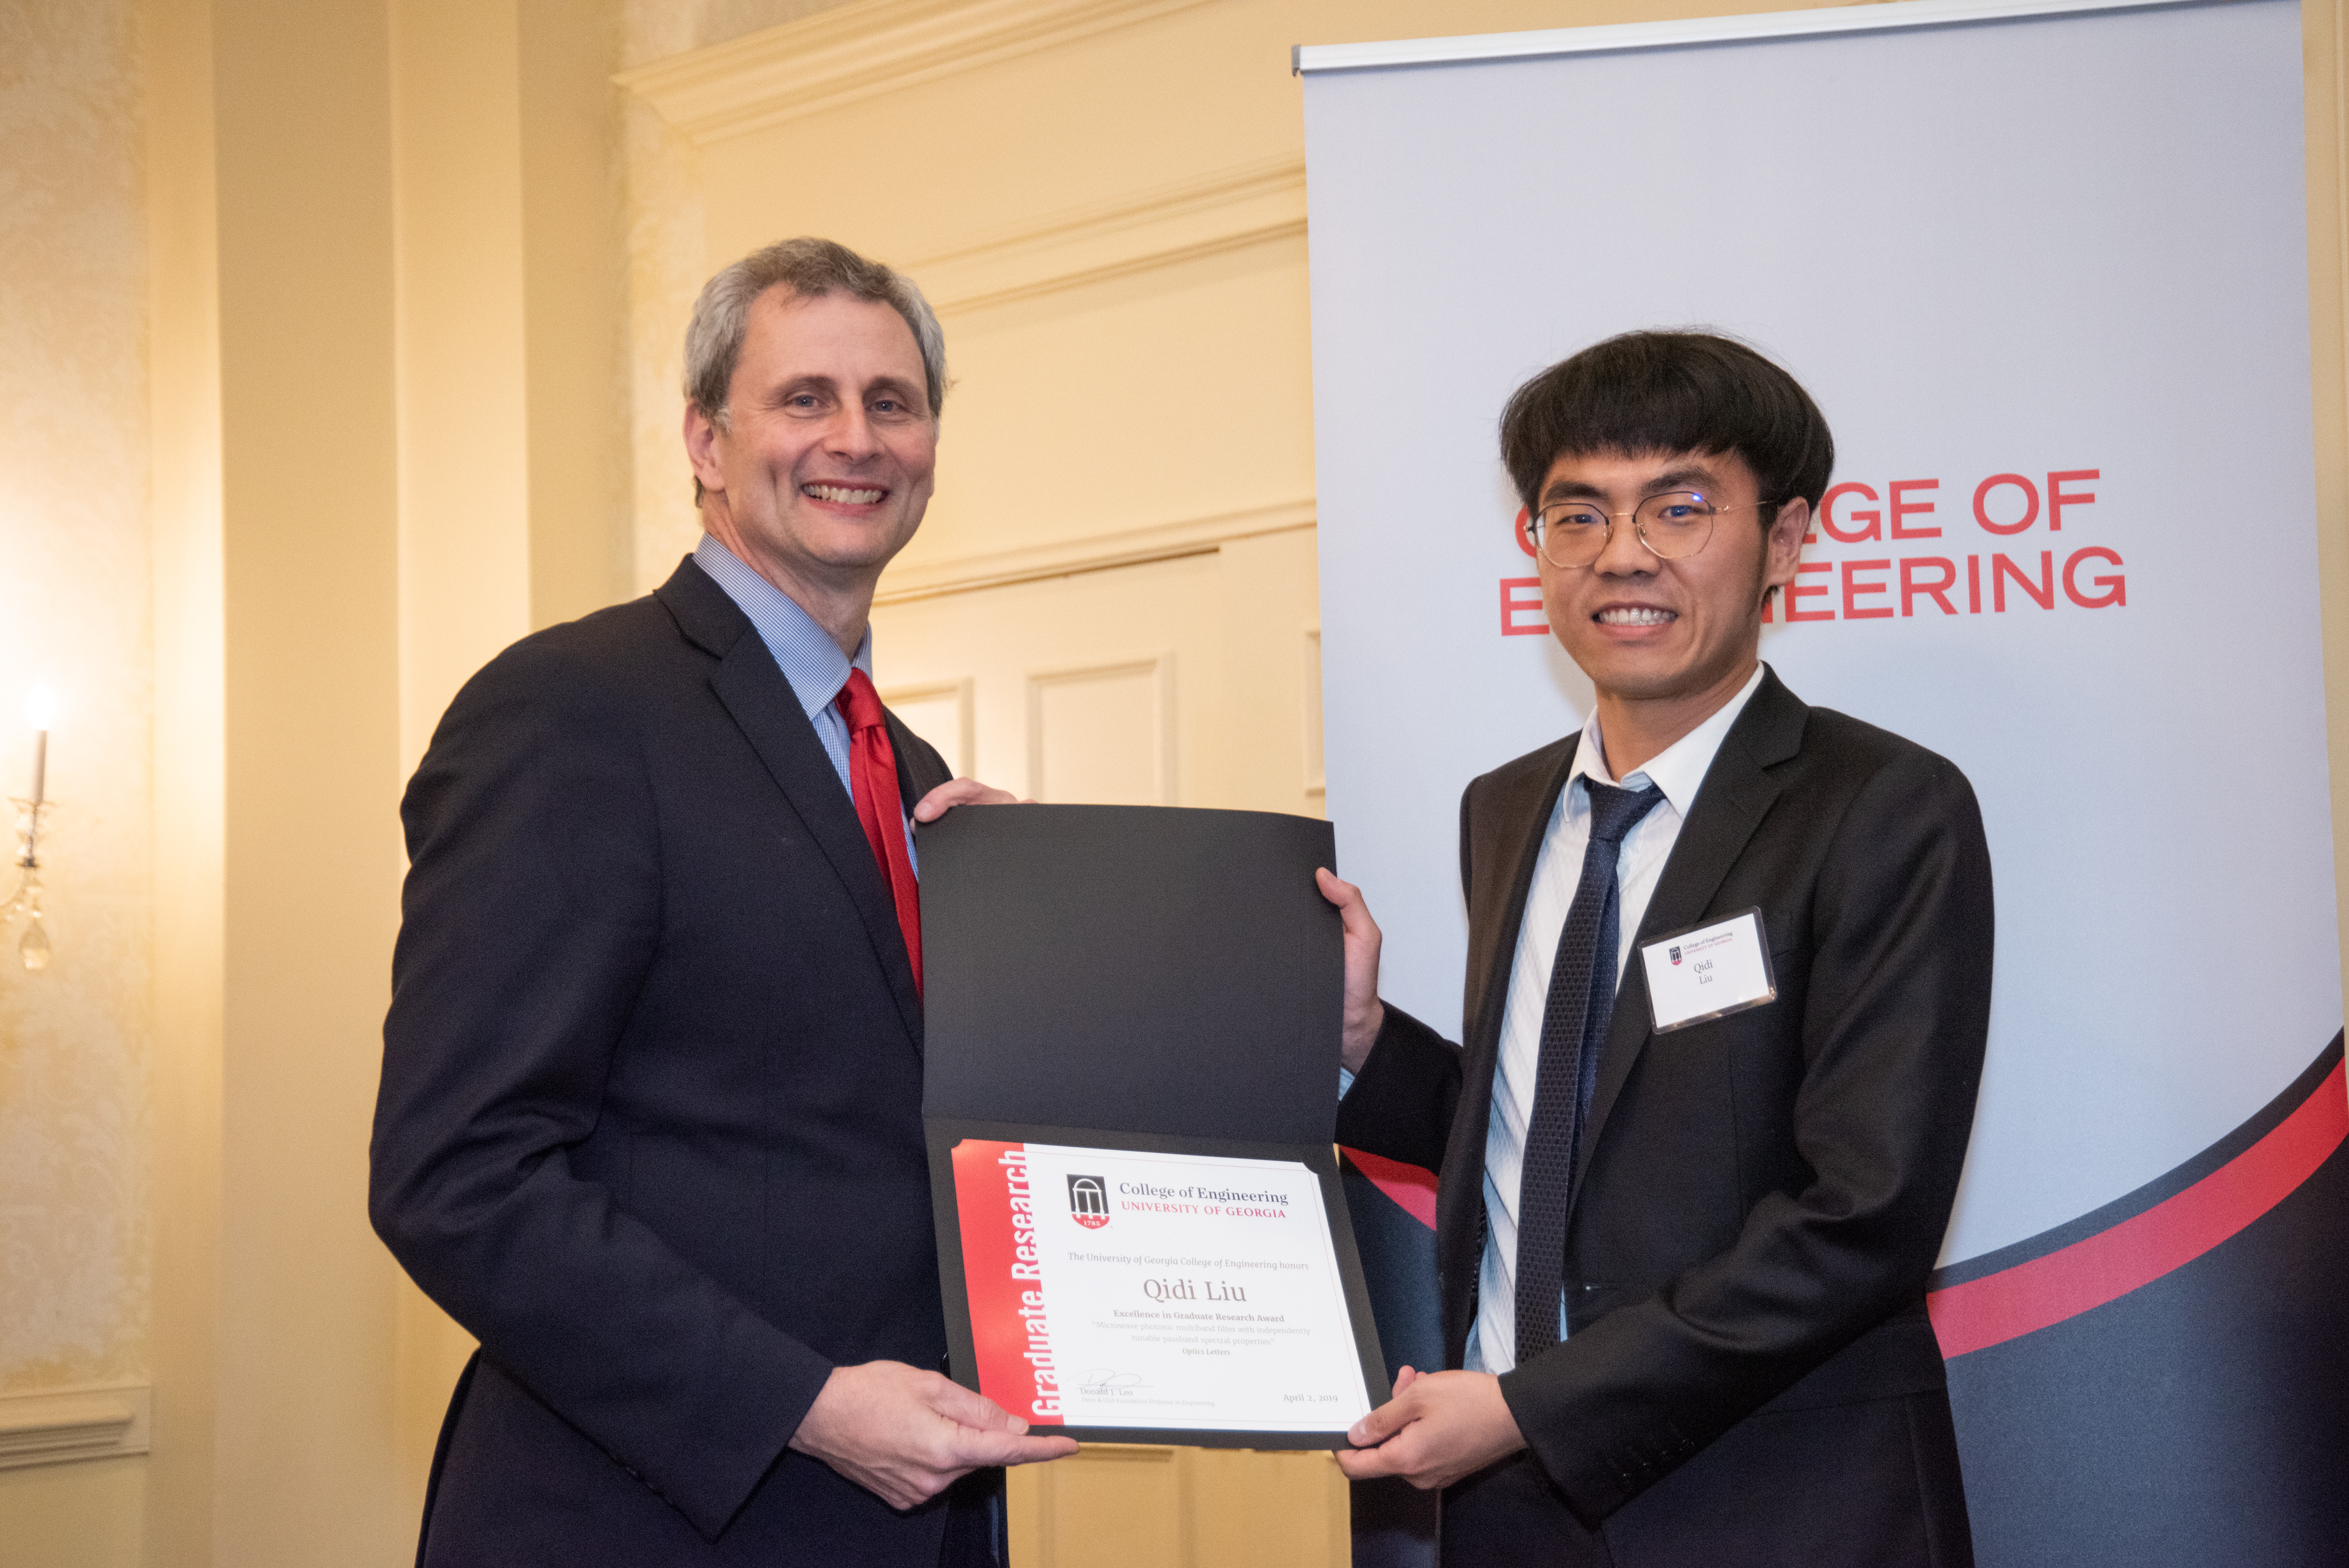 2019 Qidi Liu - Excellence in Graduate Research Award